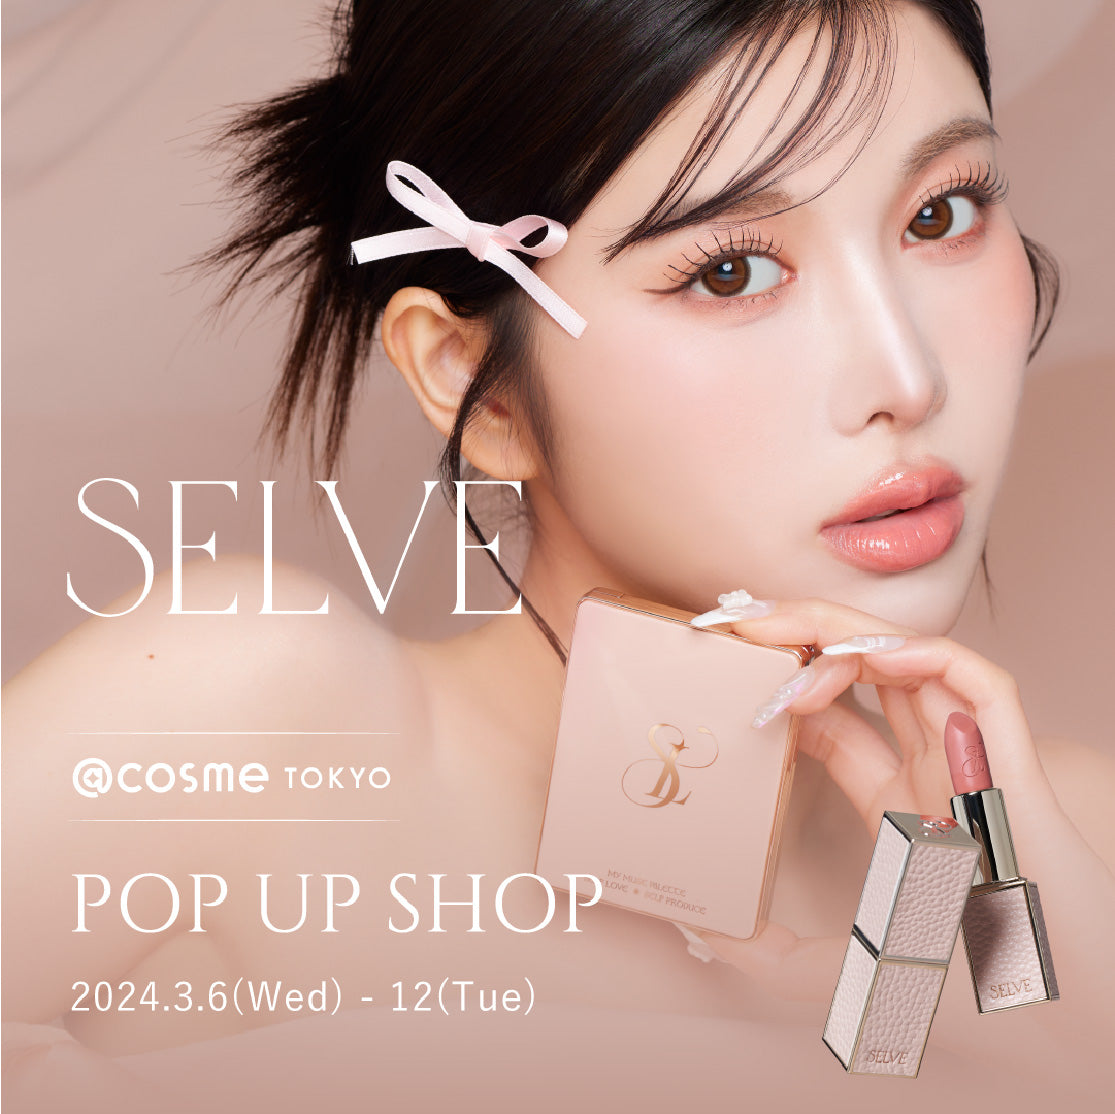 SELVE @COSME TOKYO POP UP SHOP 2024.3.6(Wed) - 12(Tue)